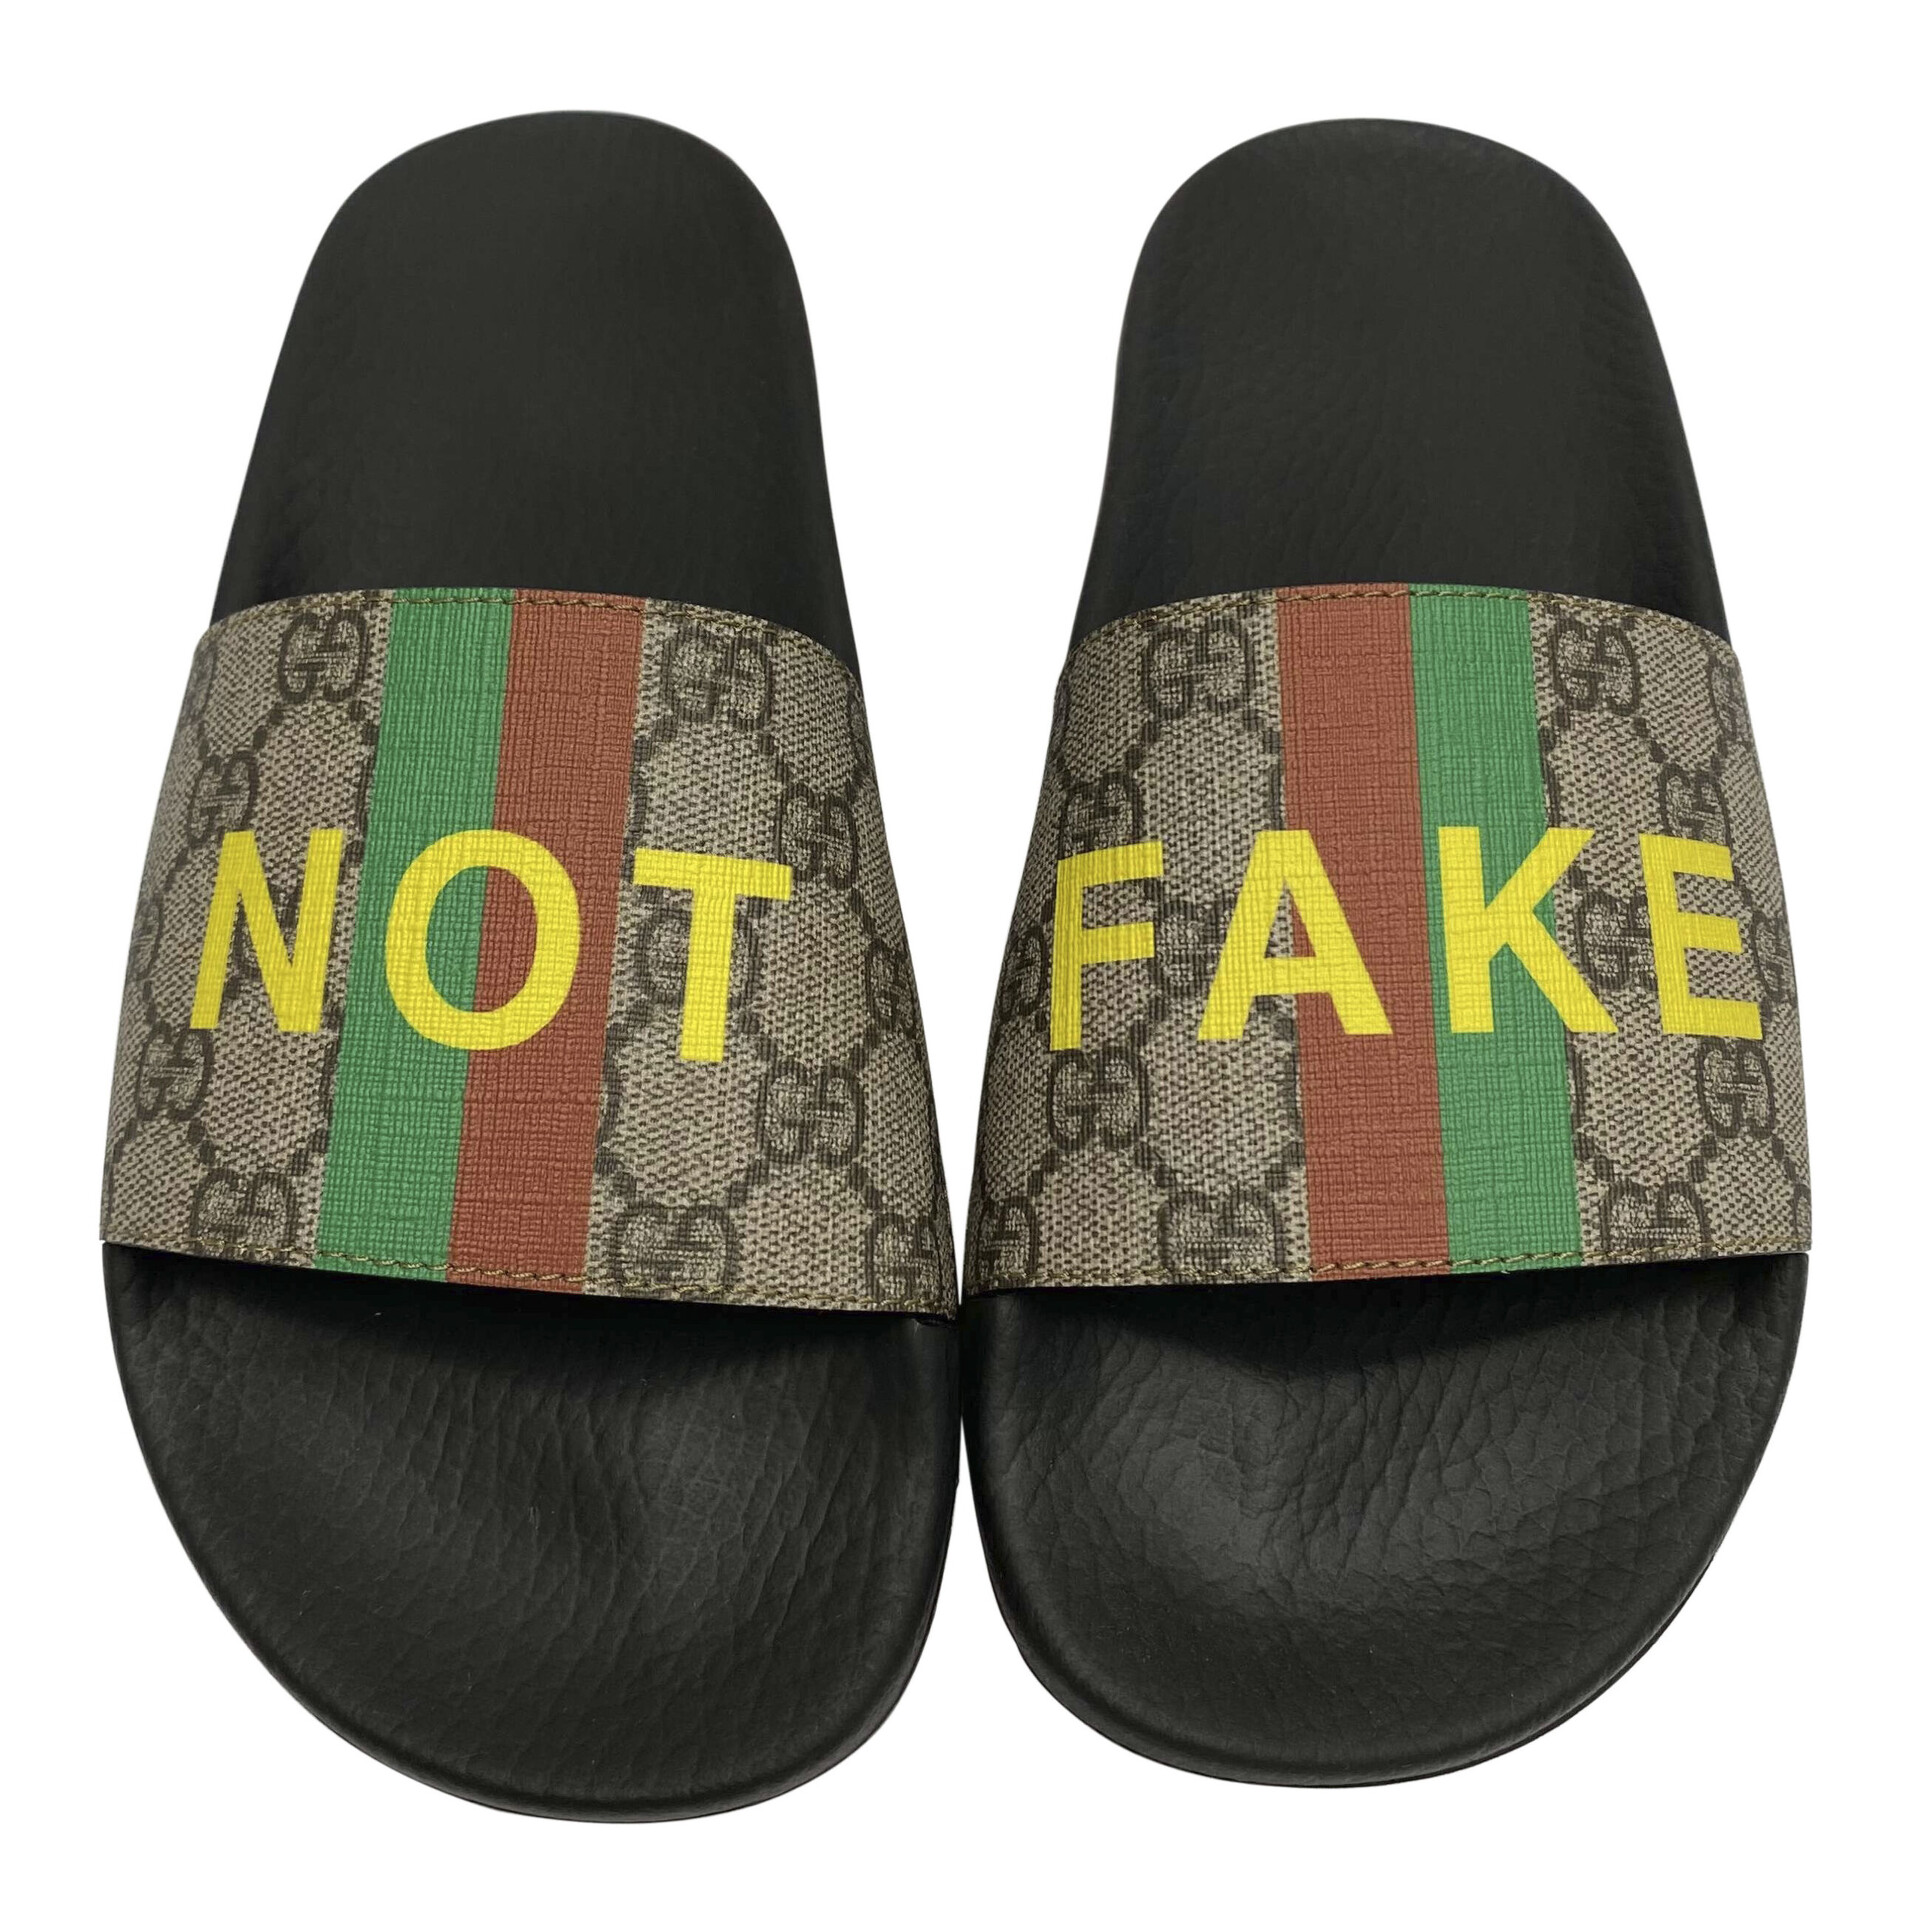 Slide Gucci Not Fake